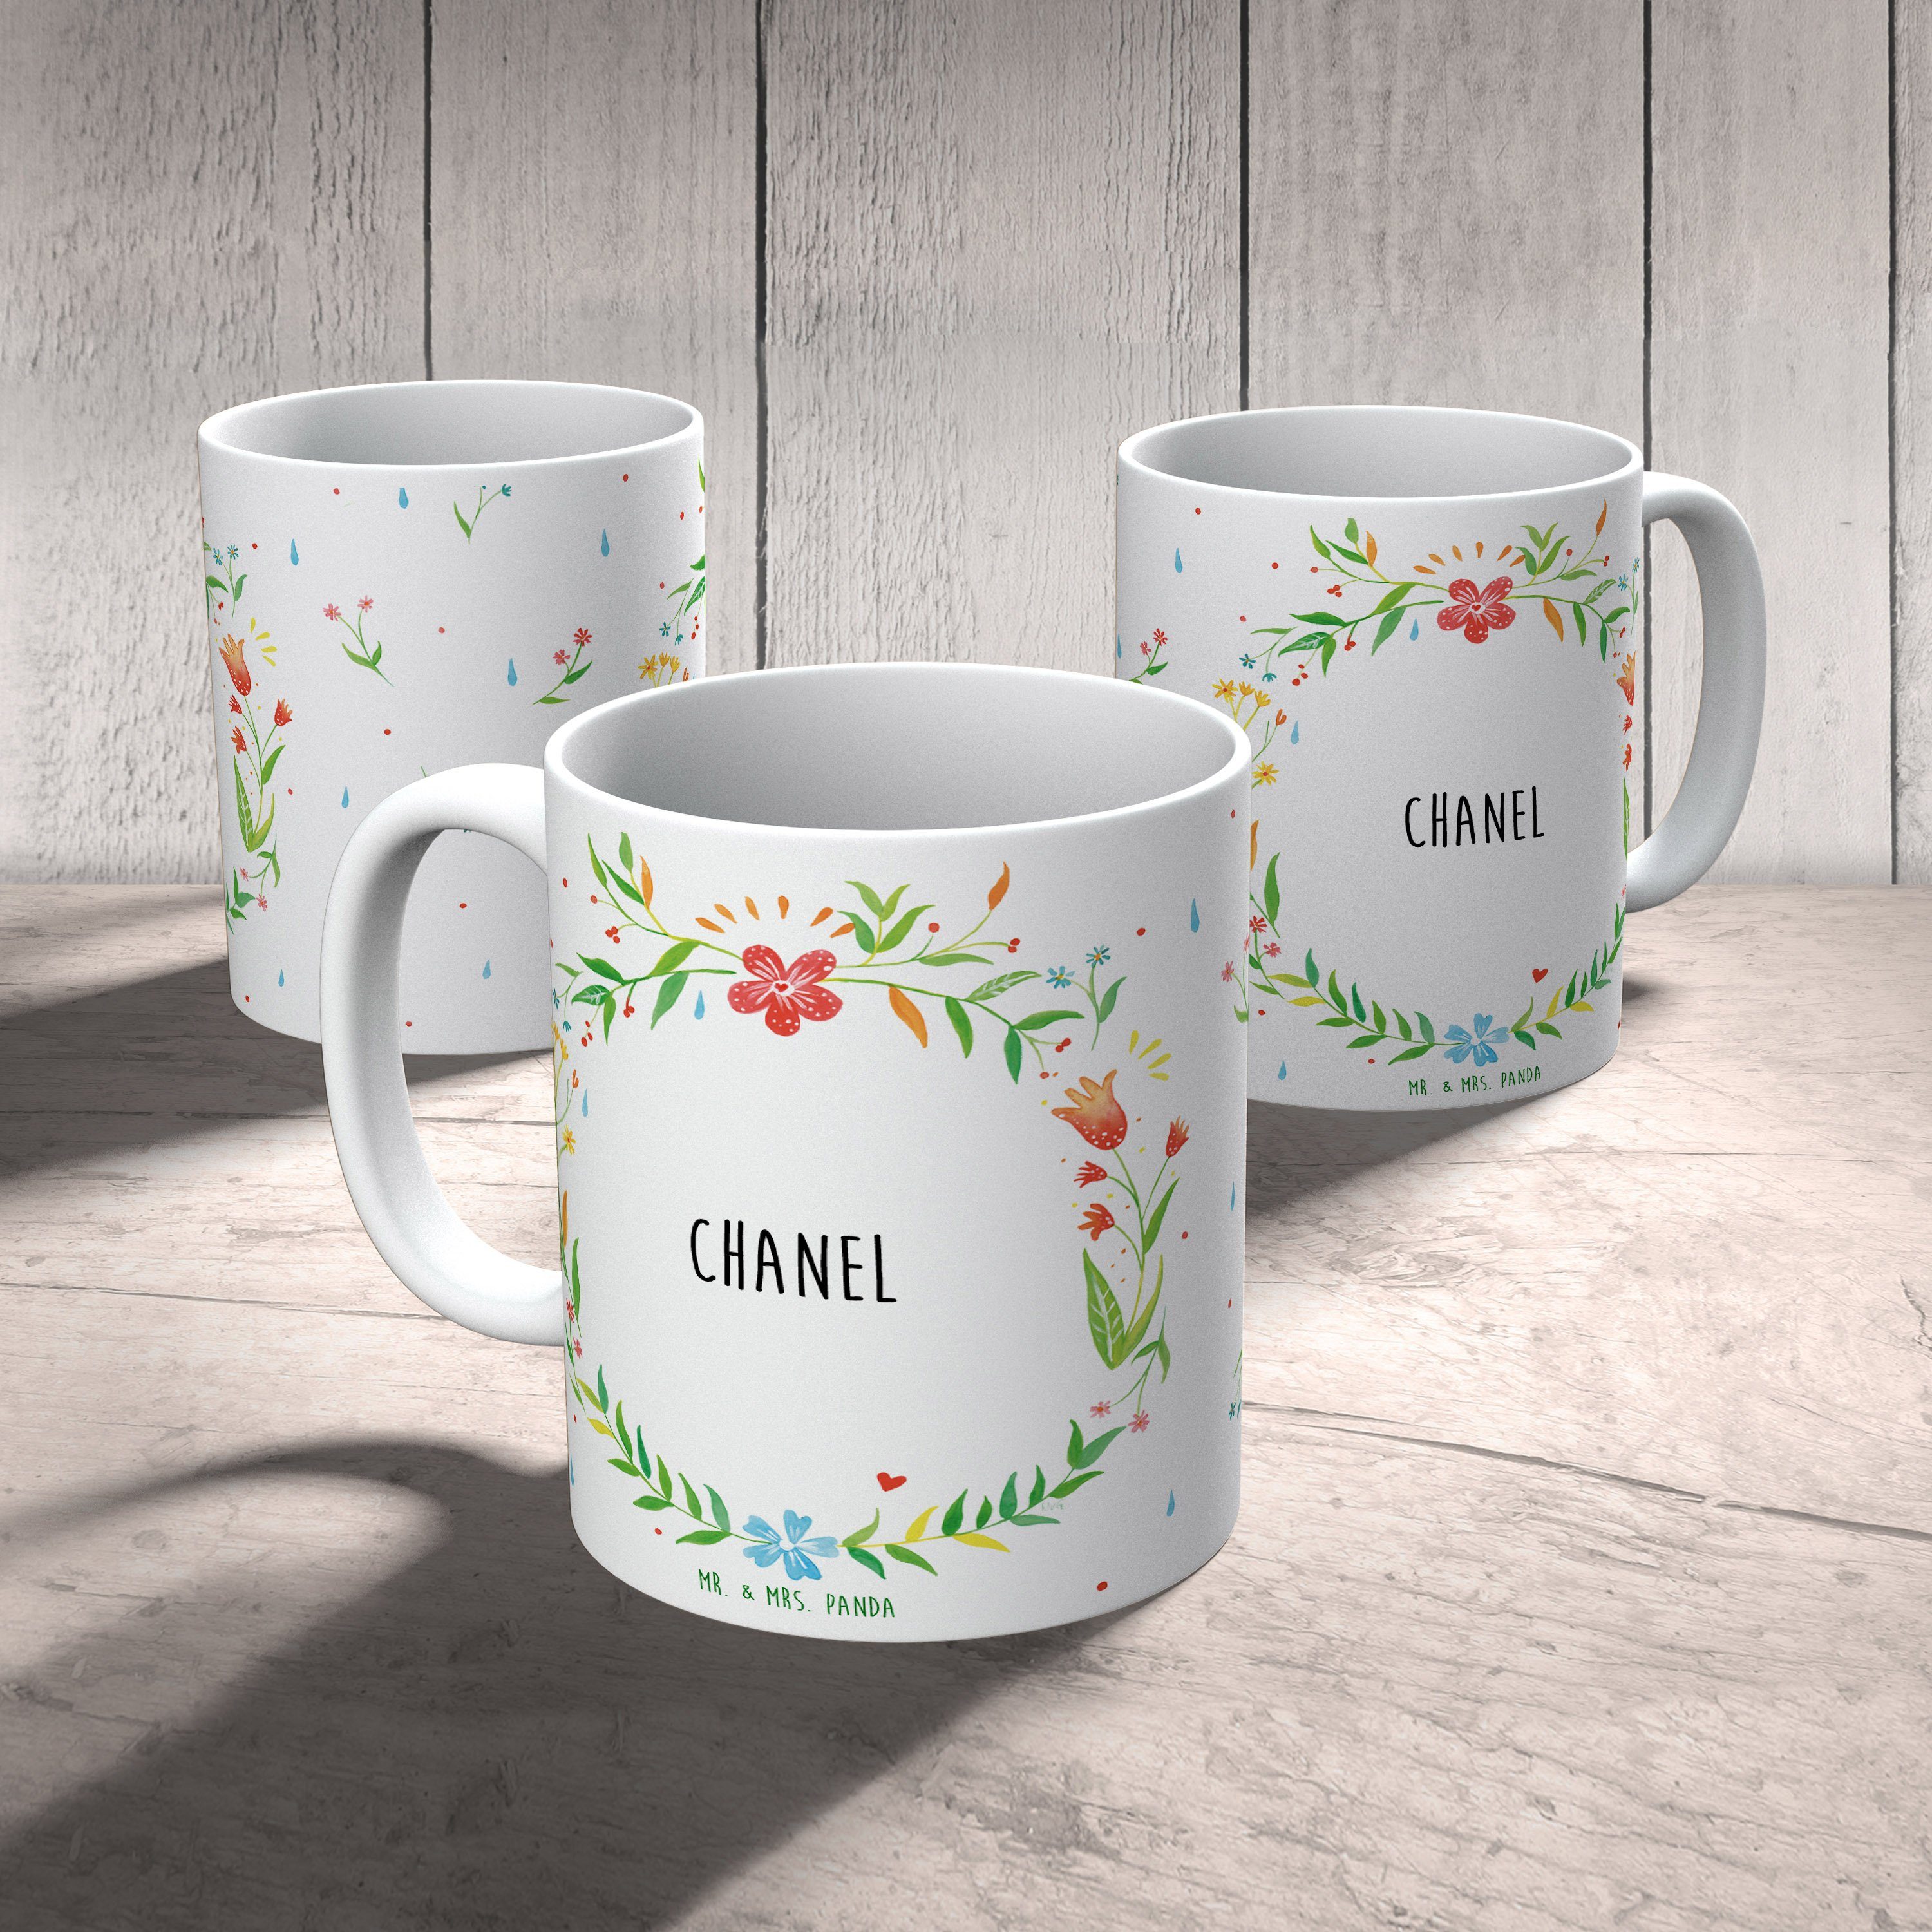 Teetasse, Geschenk Keramik Mr. Tasse, Panda Tasse, Keramiktasse, Geschenk, - Tasse Büro Mrs. & Chanel